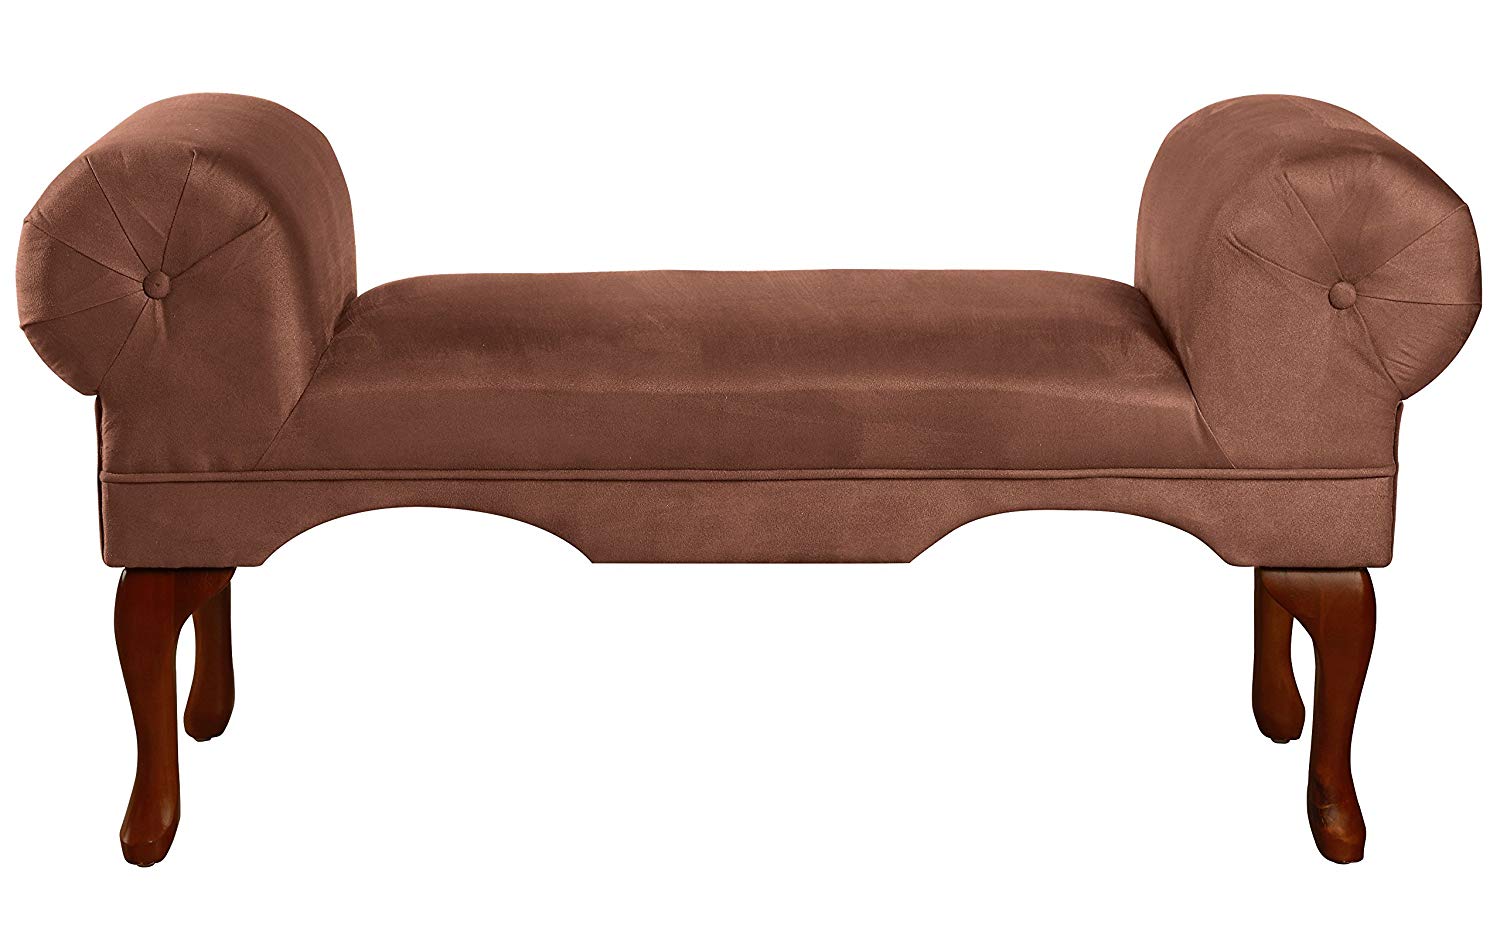 45" x 17" x 23" Chocolate Mfb Upholstery Wood Leg Bench